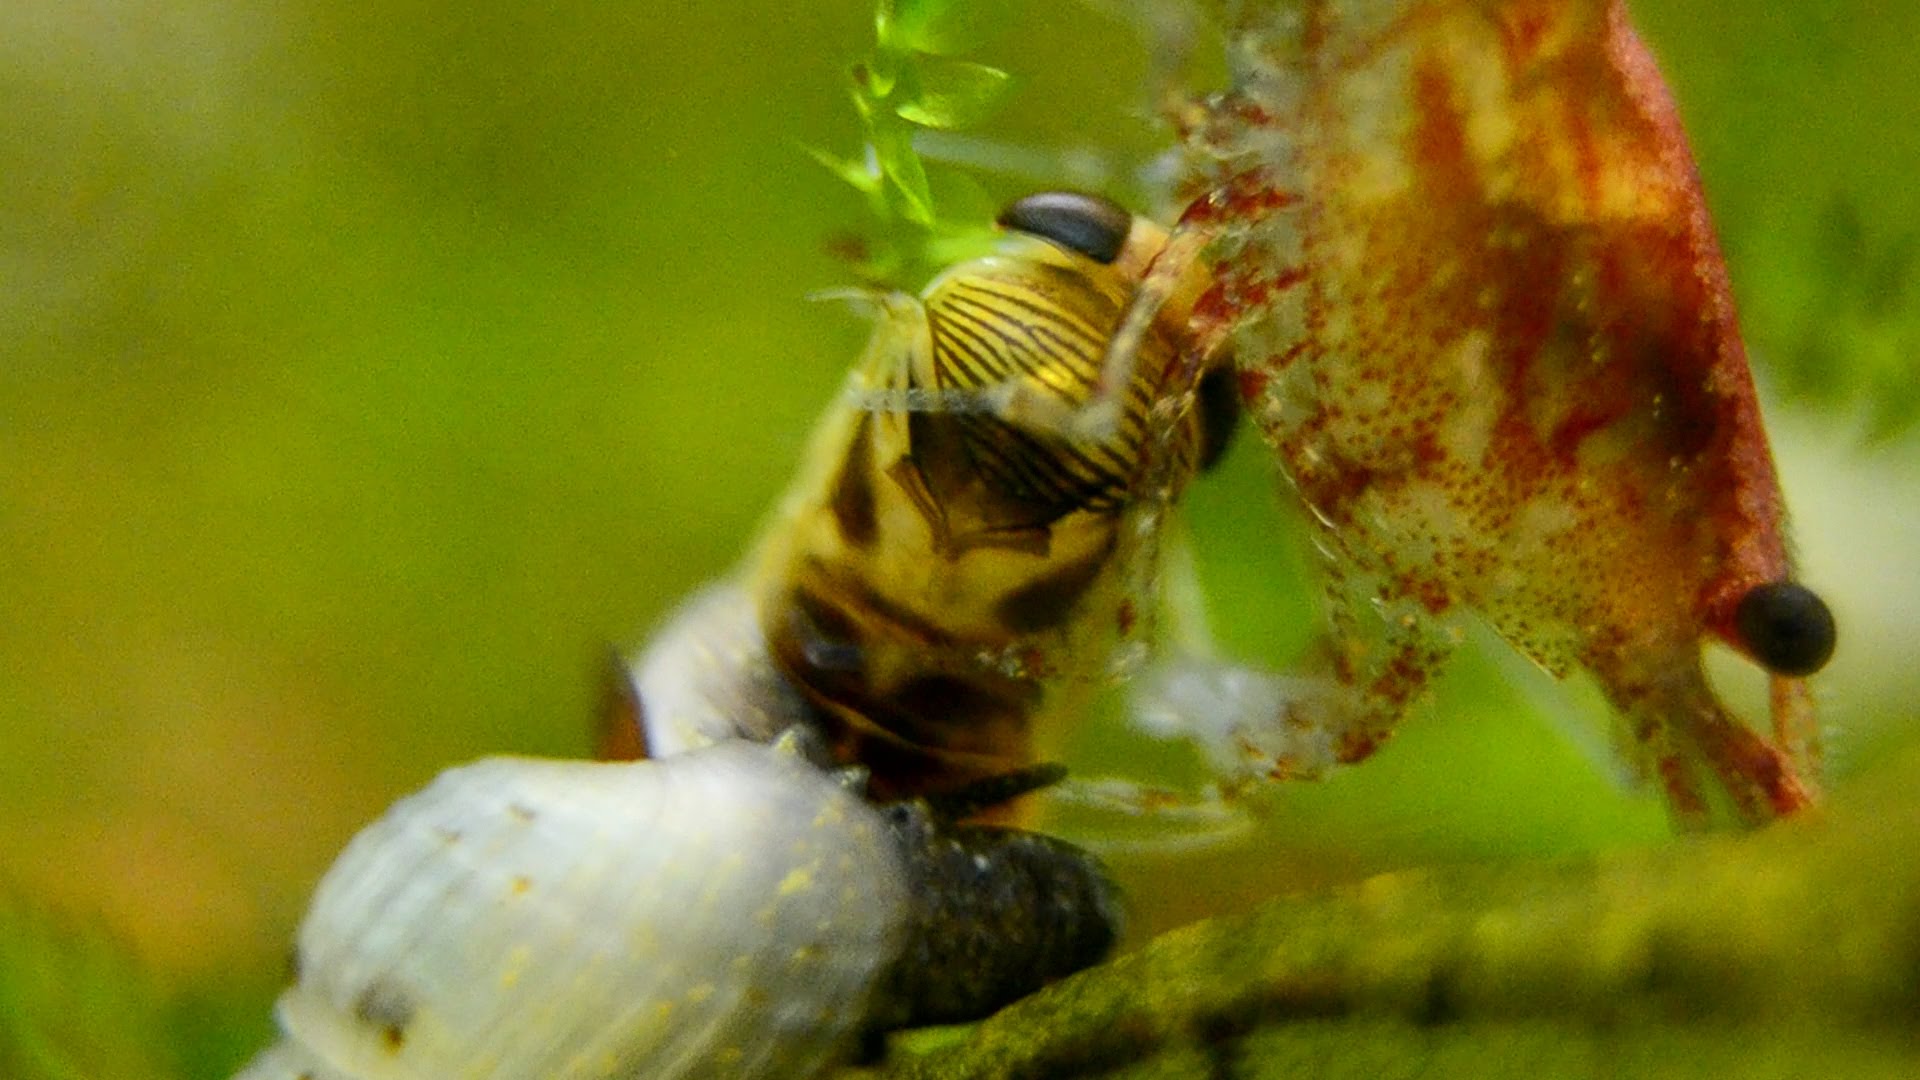 Shrimp eating Insect in Aquarium [Macro - Close up] - YouTube